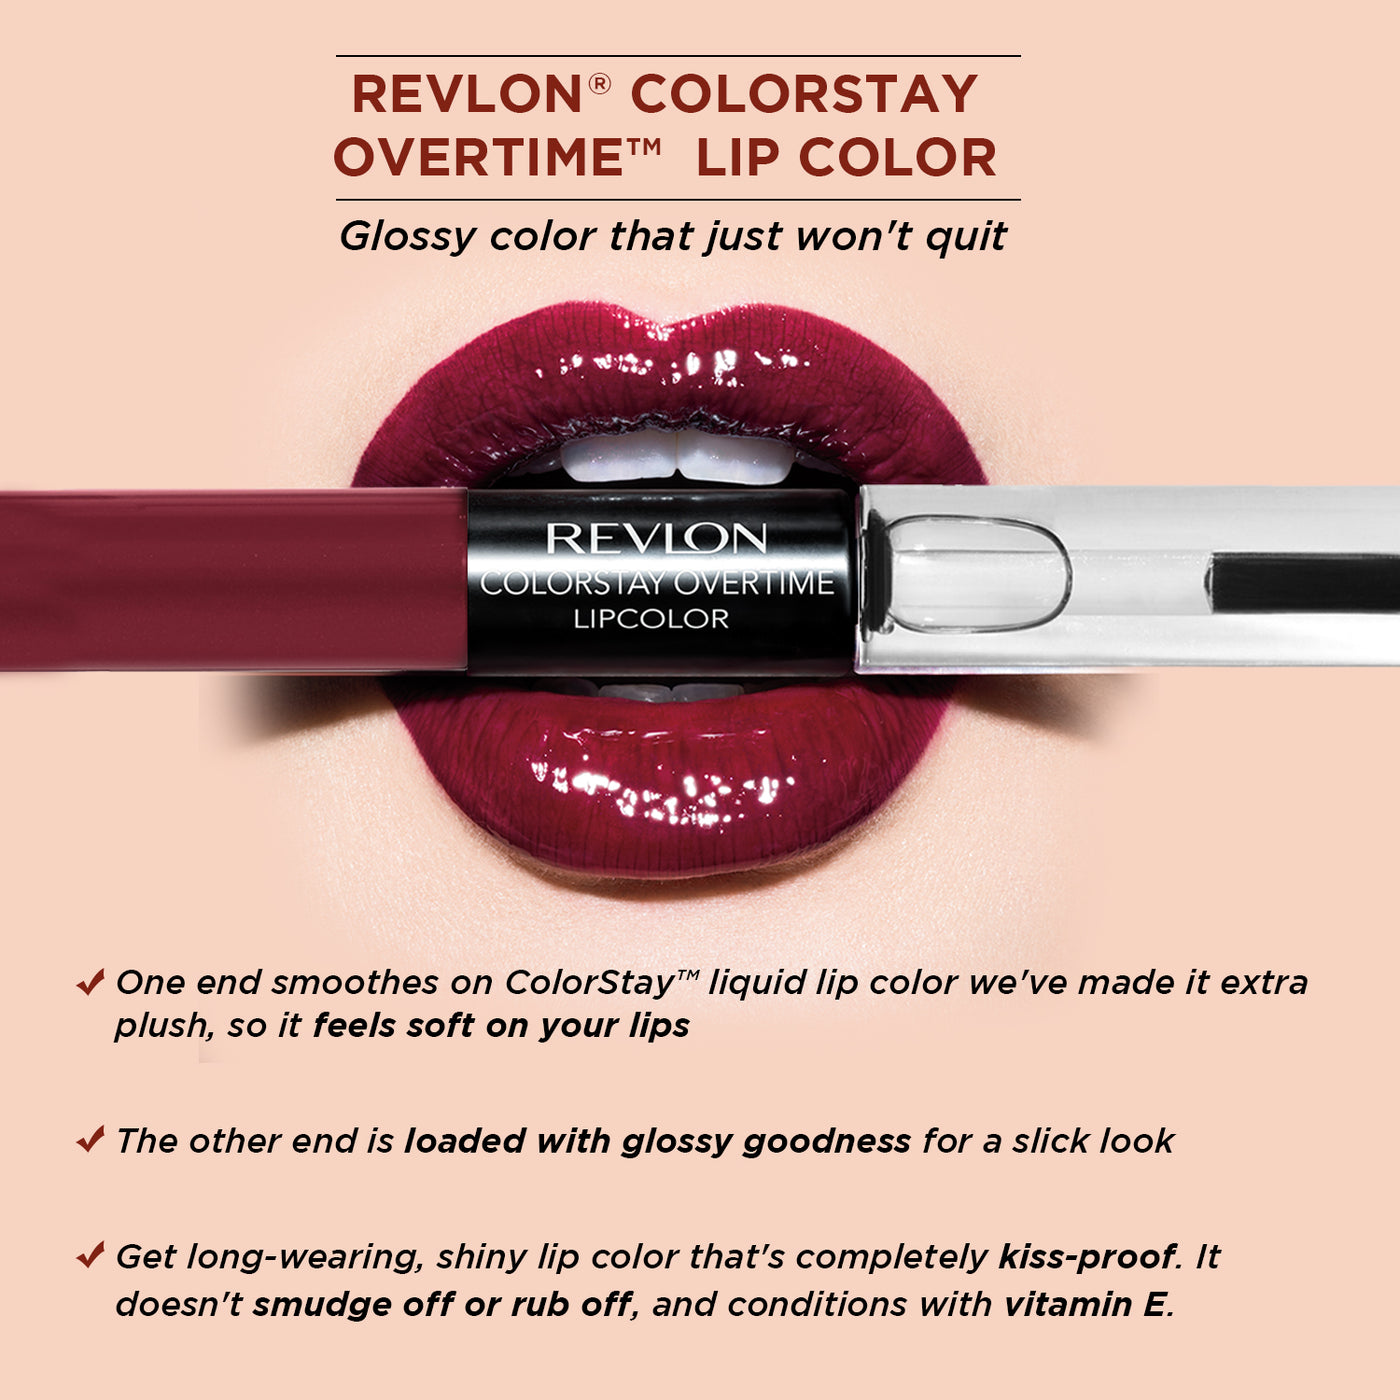 Revlon Colorstay Overtime Lip Color - Special Offer